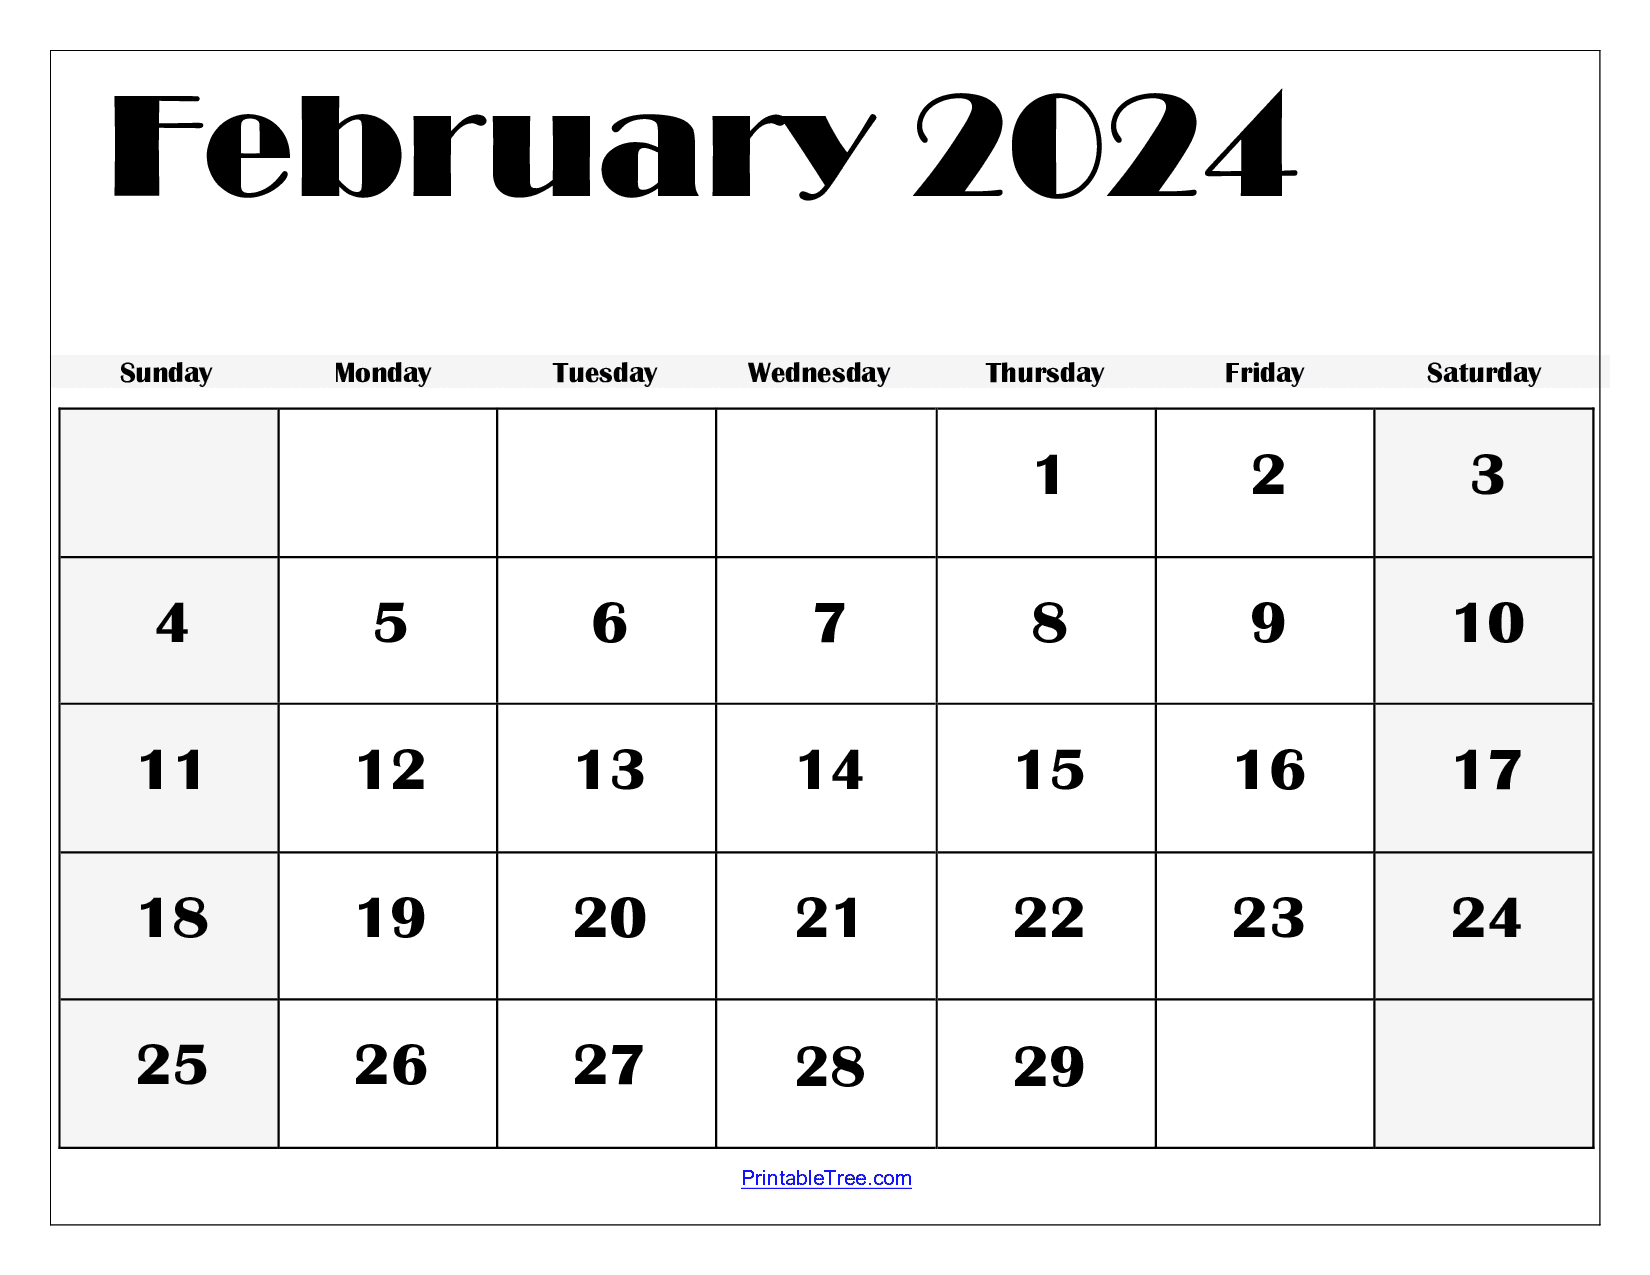 February 2024 Calendar Printable Pdf Template With Holidays for February 2024 Calendar Blank Printable